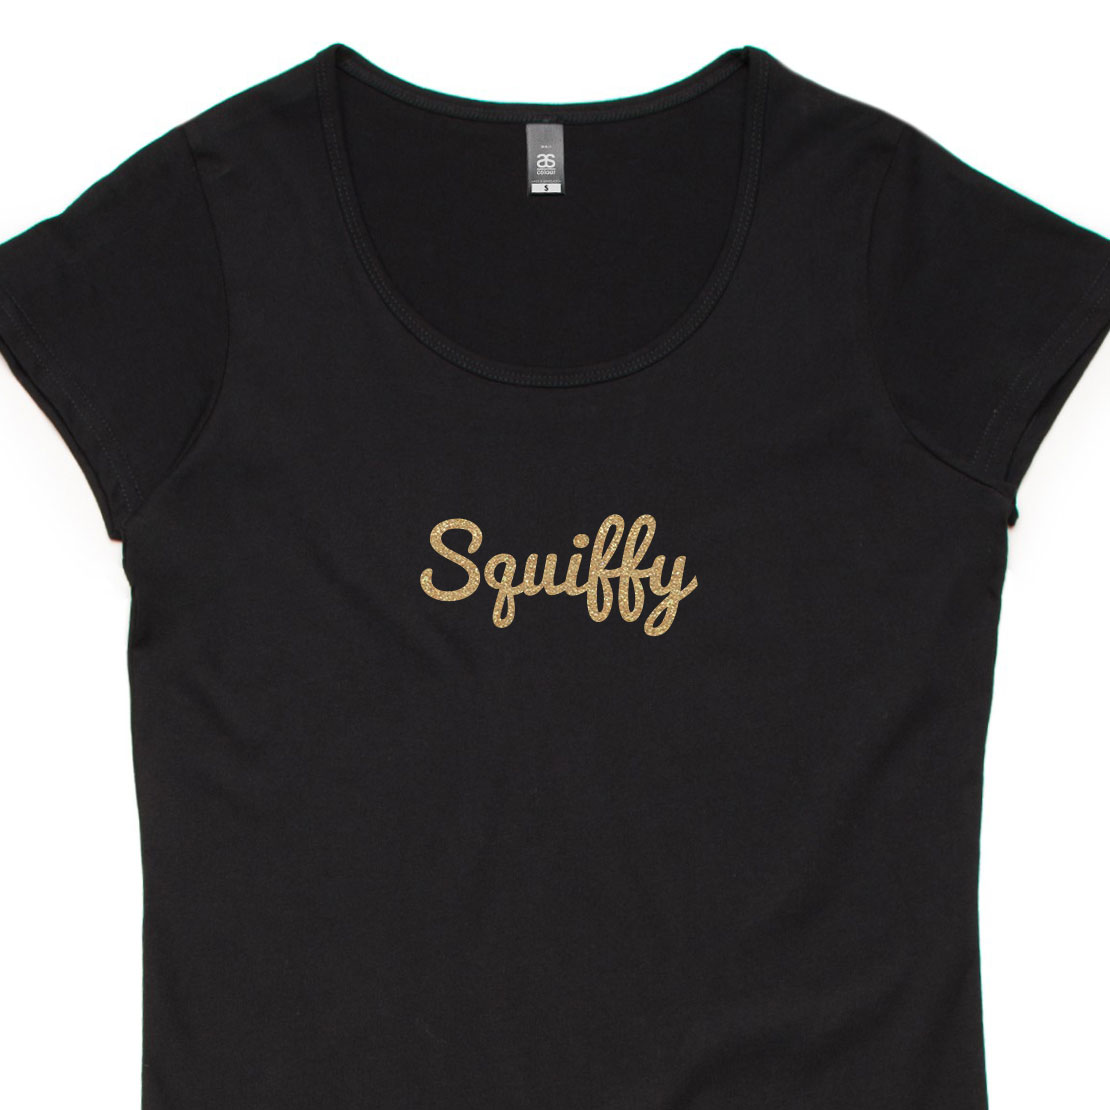 cc-product-squiffy-tshirt-black-gold-vinyl-2